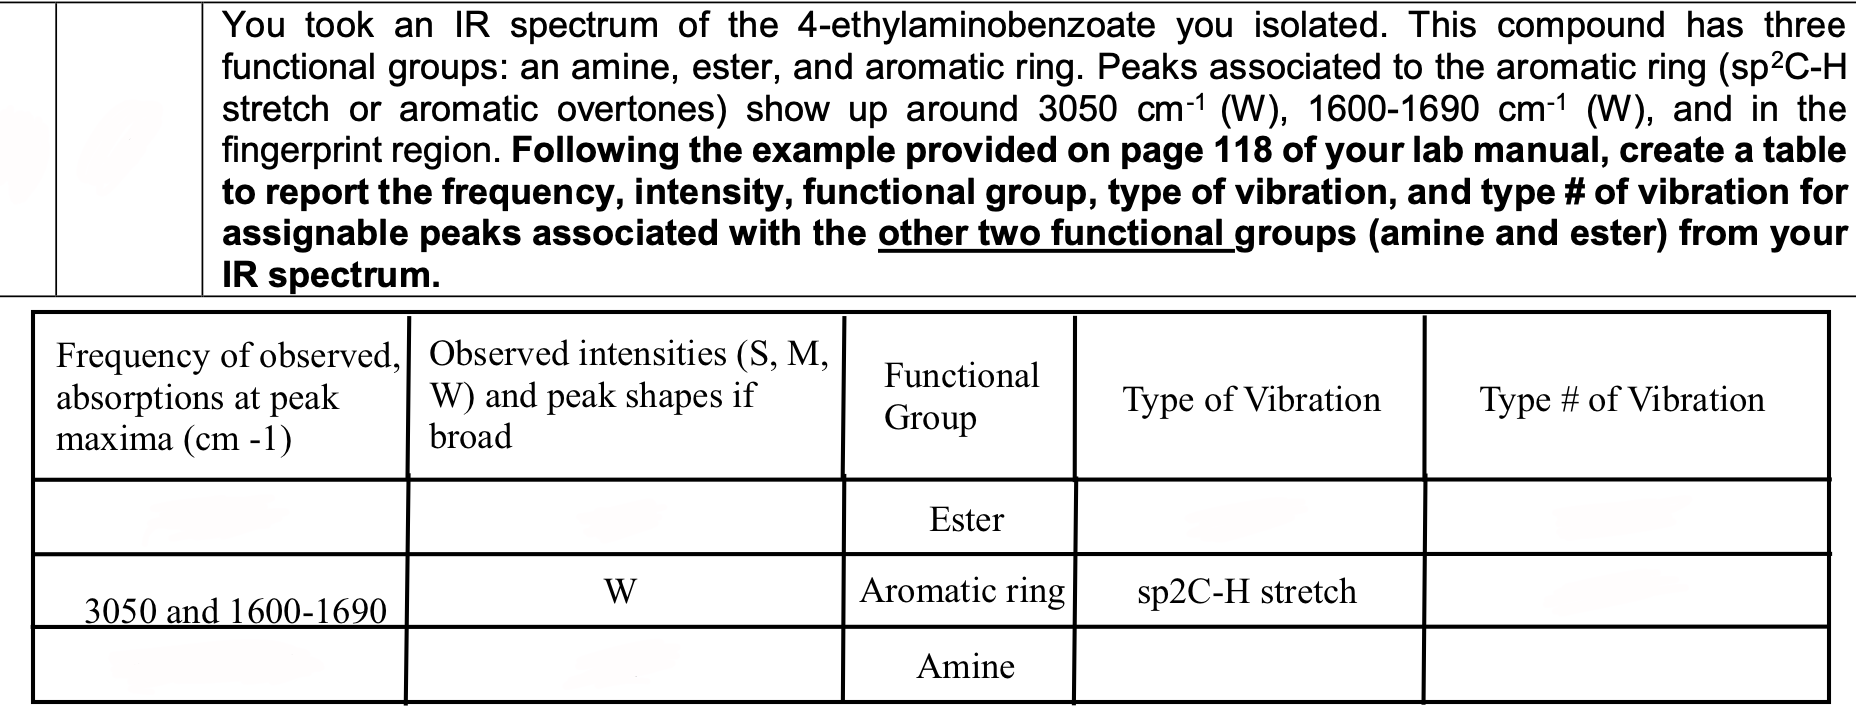 ir spectrum table aromatic ring